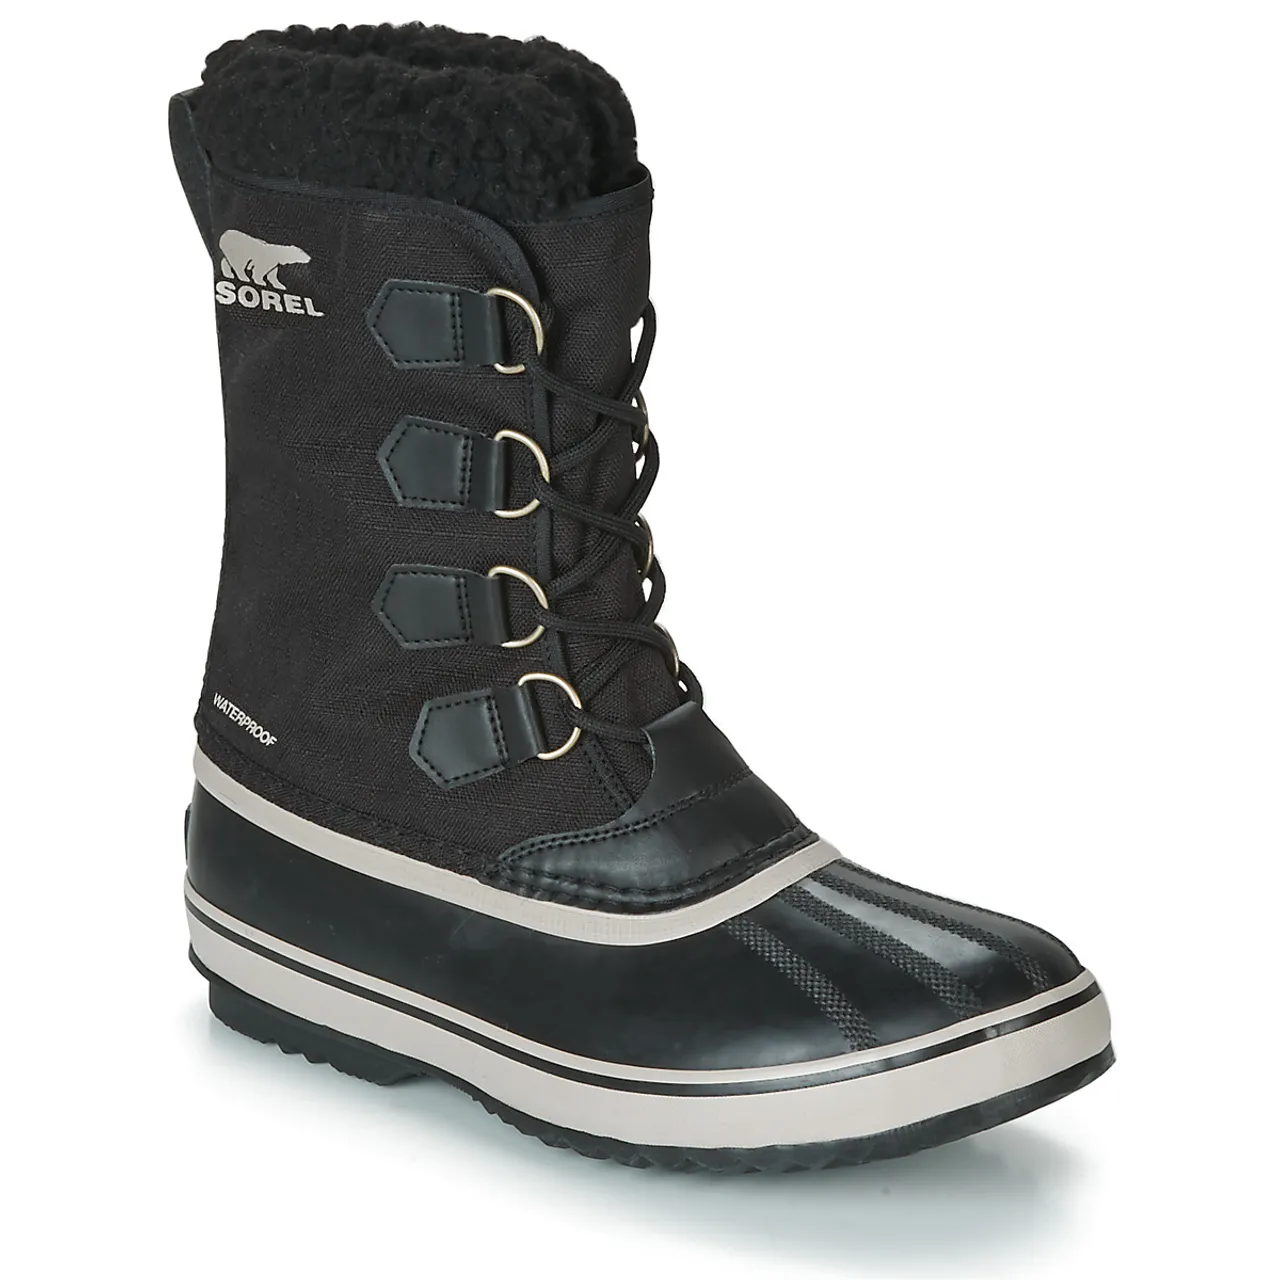 Sorel  1964 PAC NYLON  men's Snow boots in Black